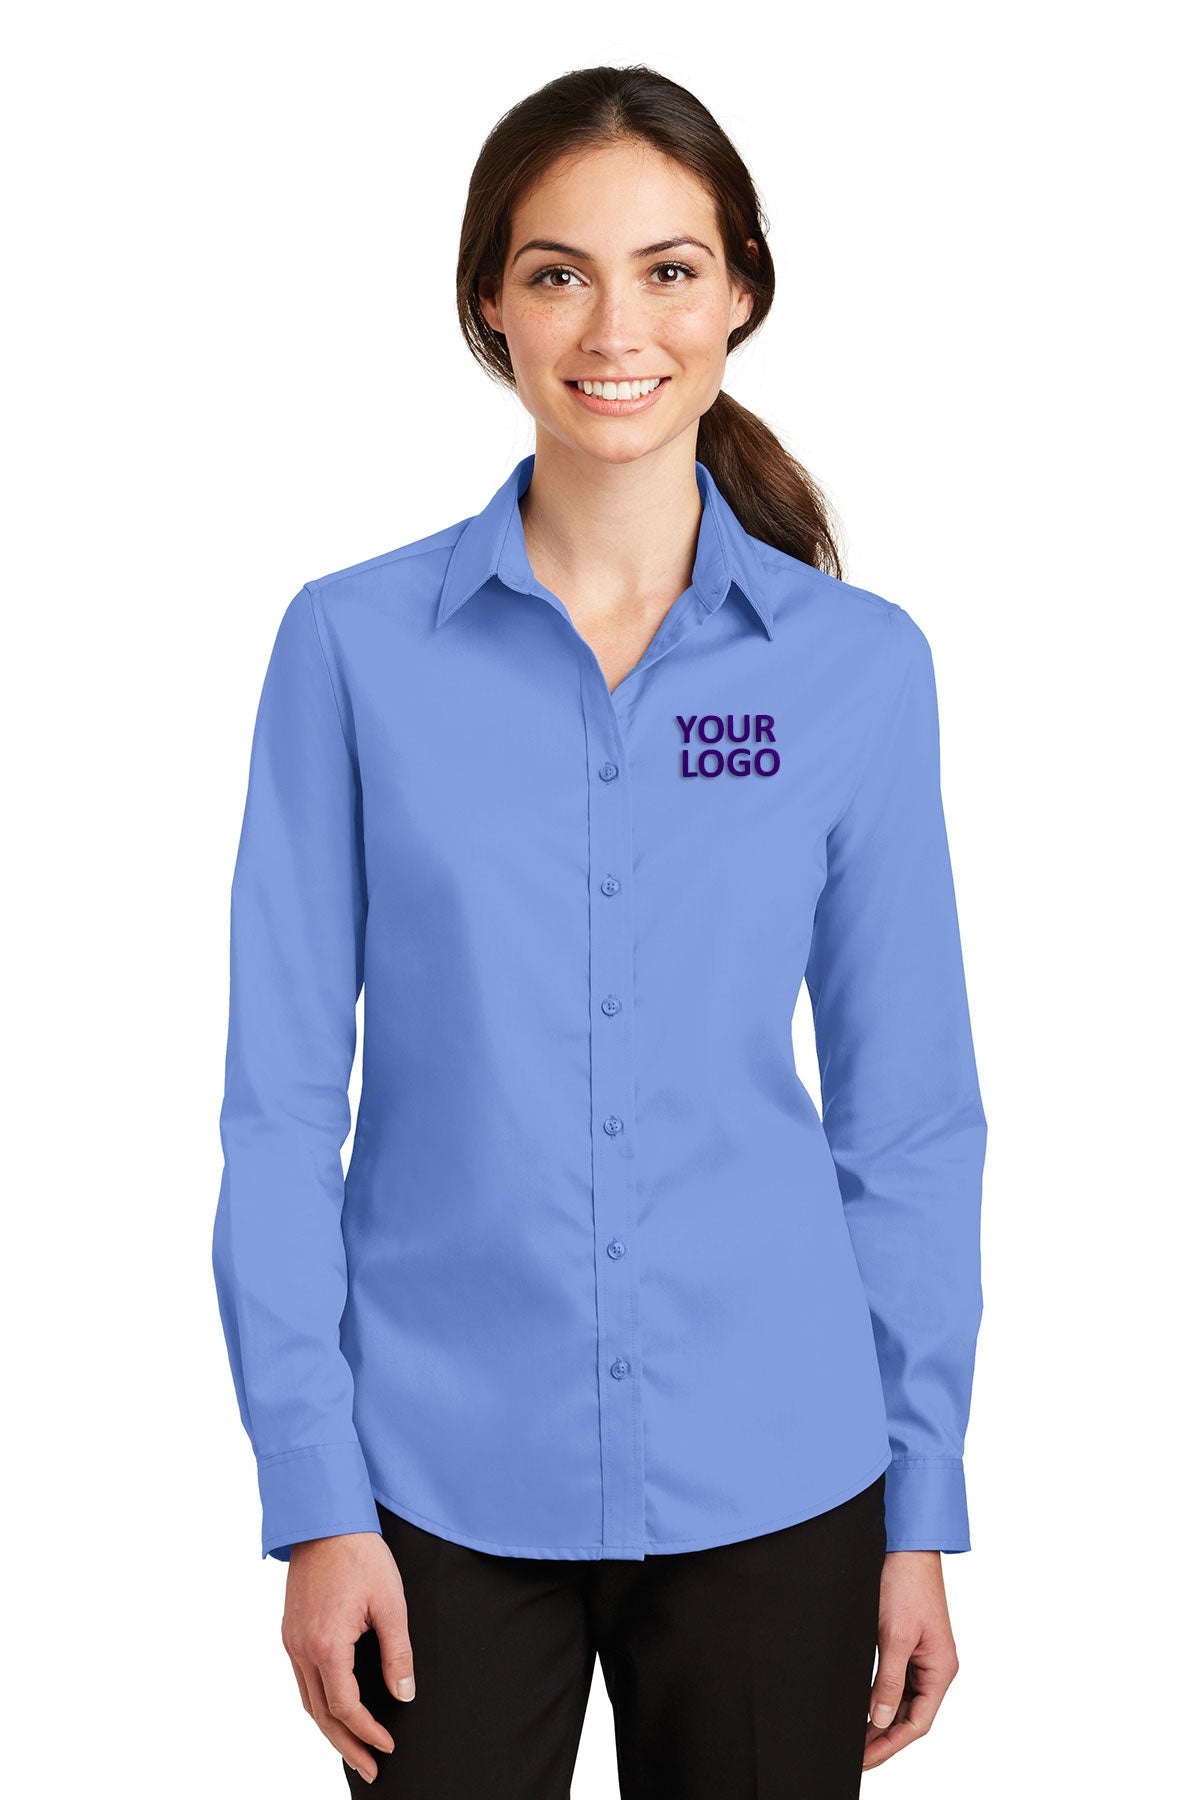 Port Authority Ultramarine Blue L663 custom work shirts